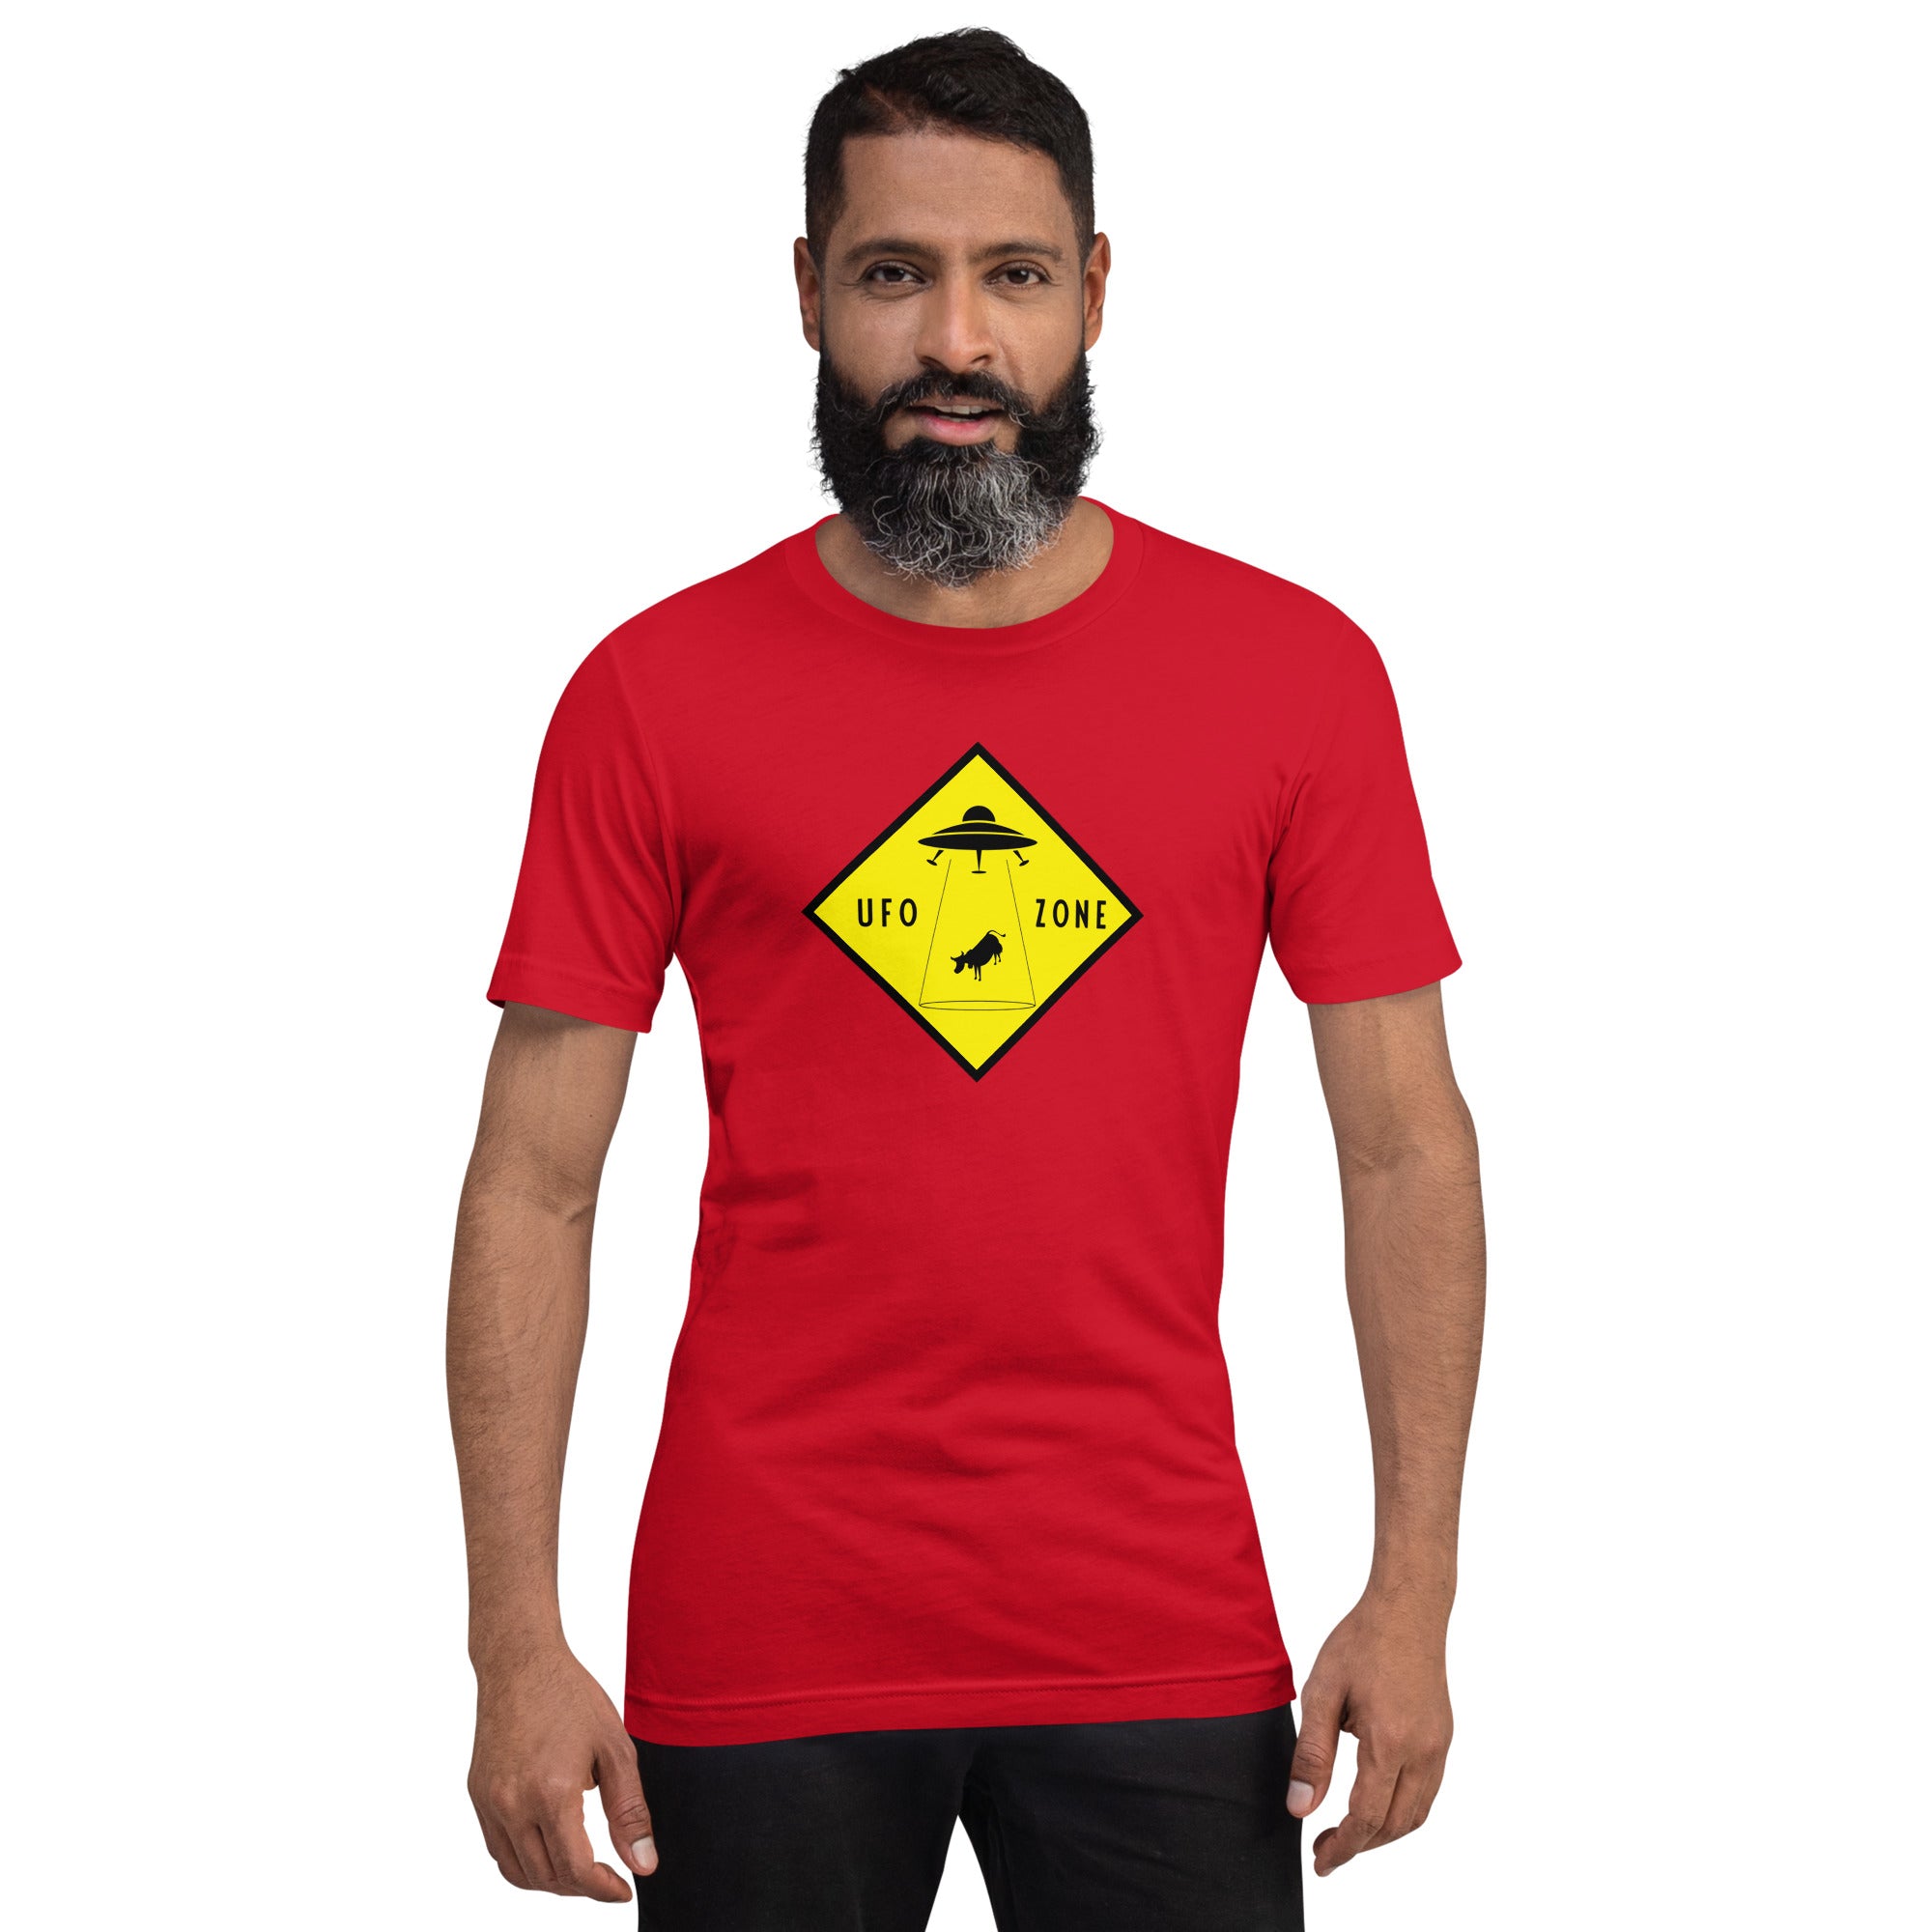 Unisex cotton t-shirt UFO Zone on bright colors